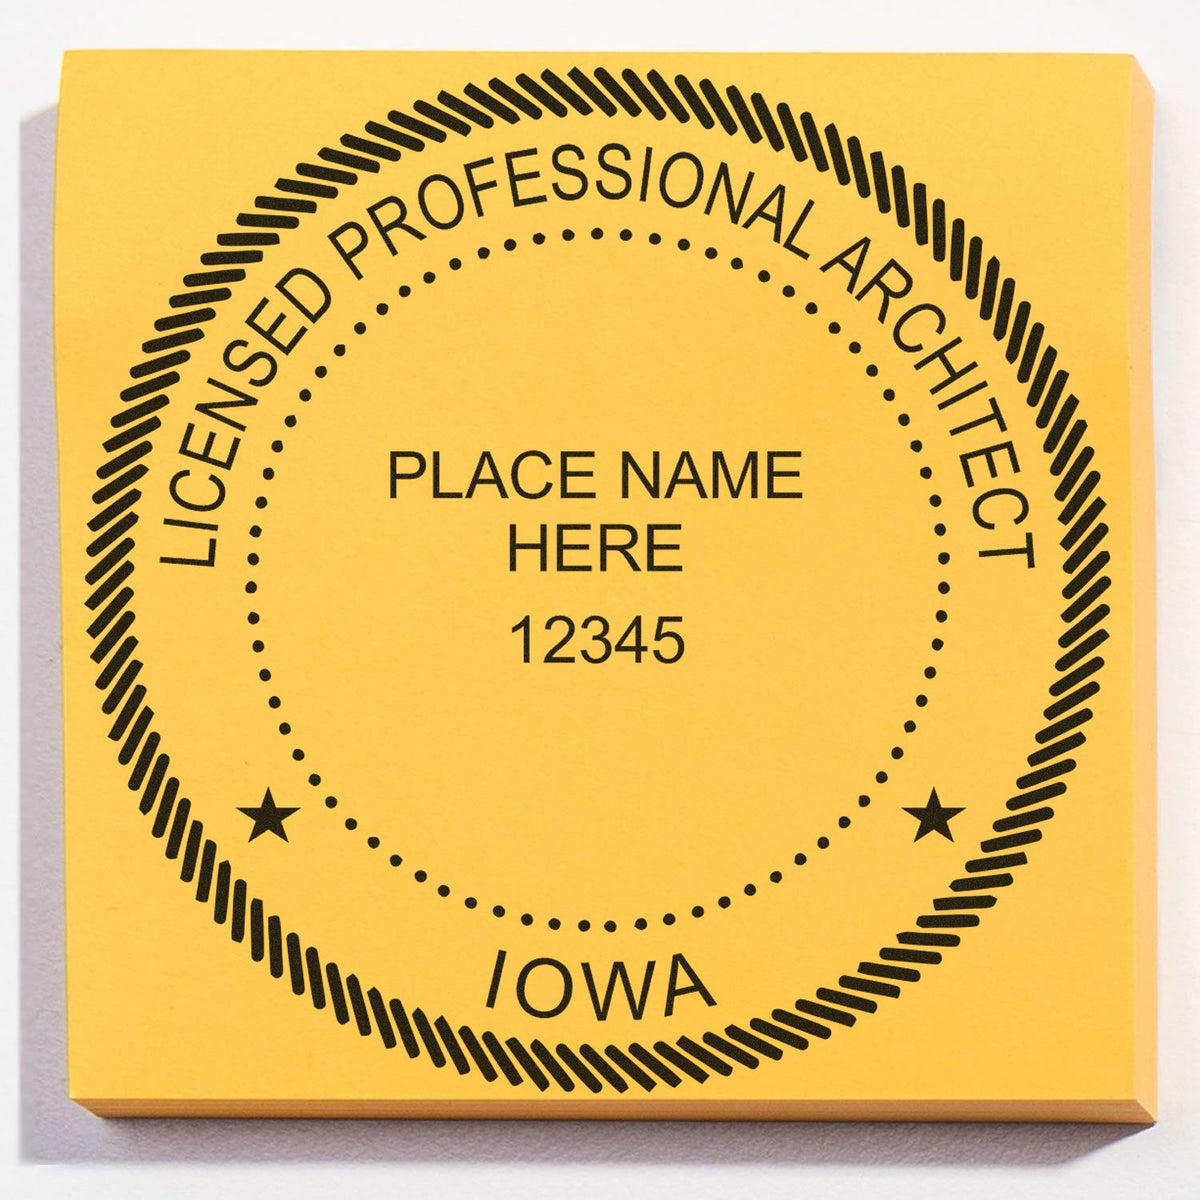 Iowa Architect Seal Stamp Lifestyle Photo